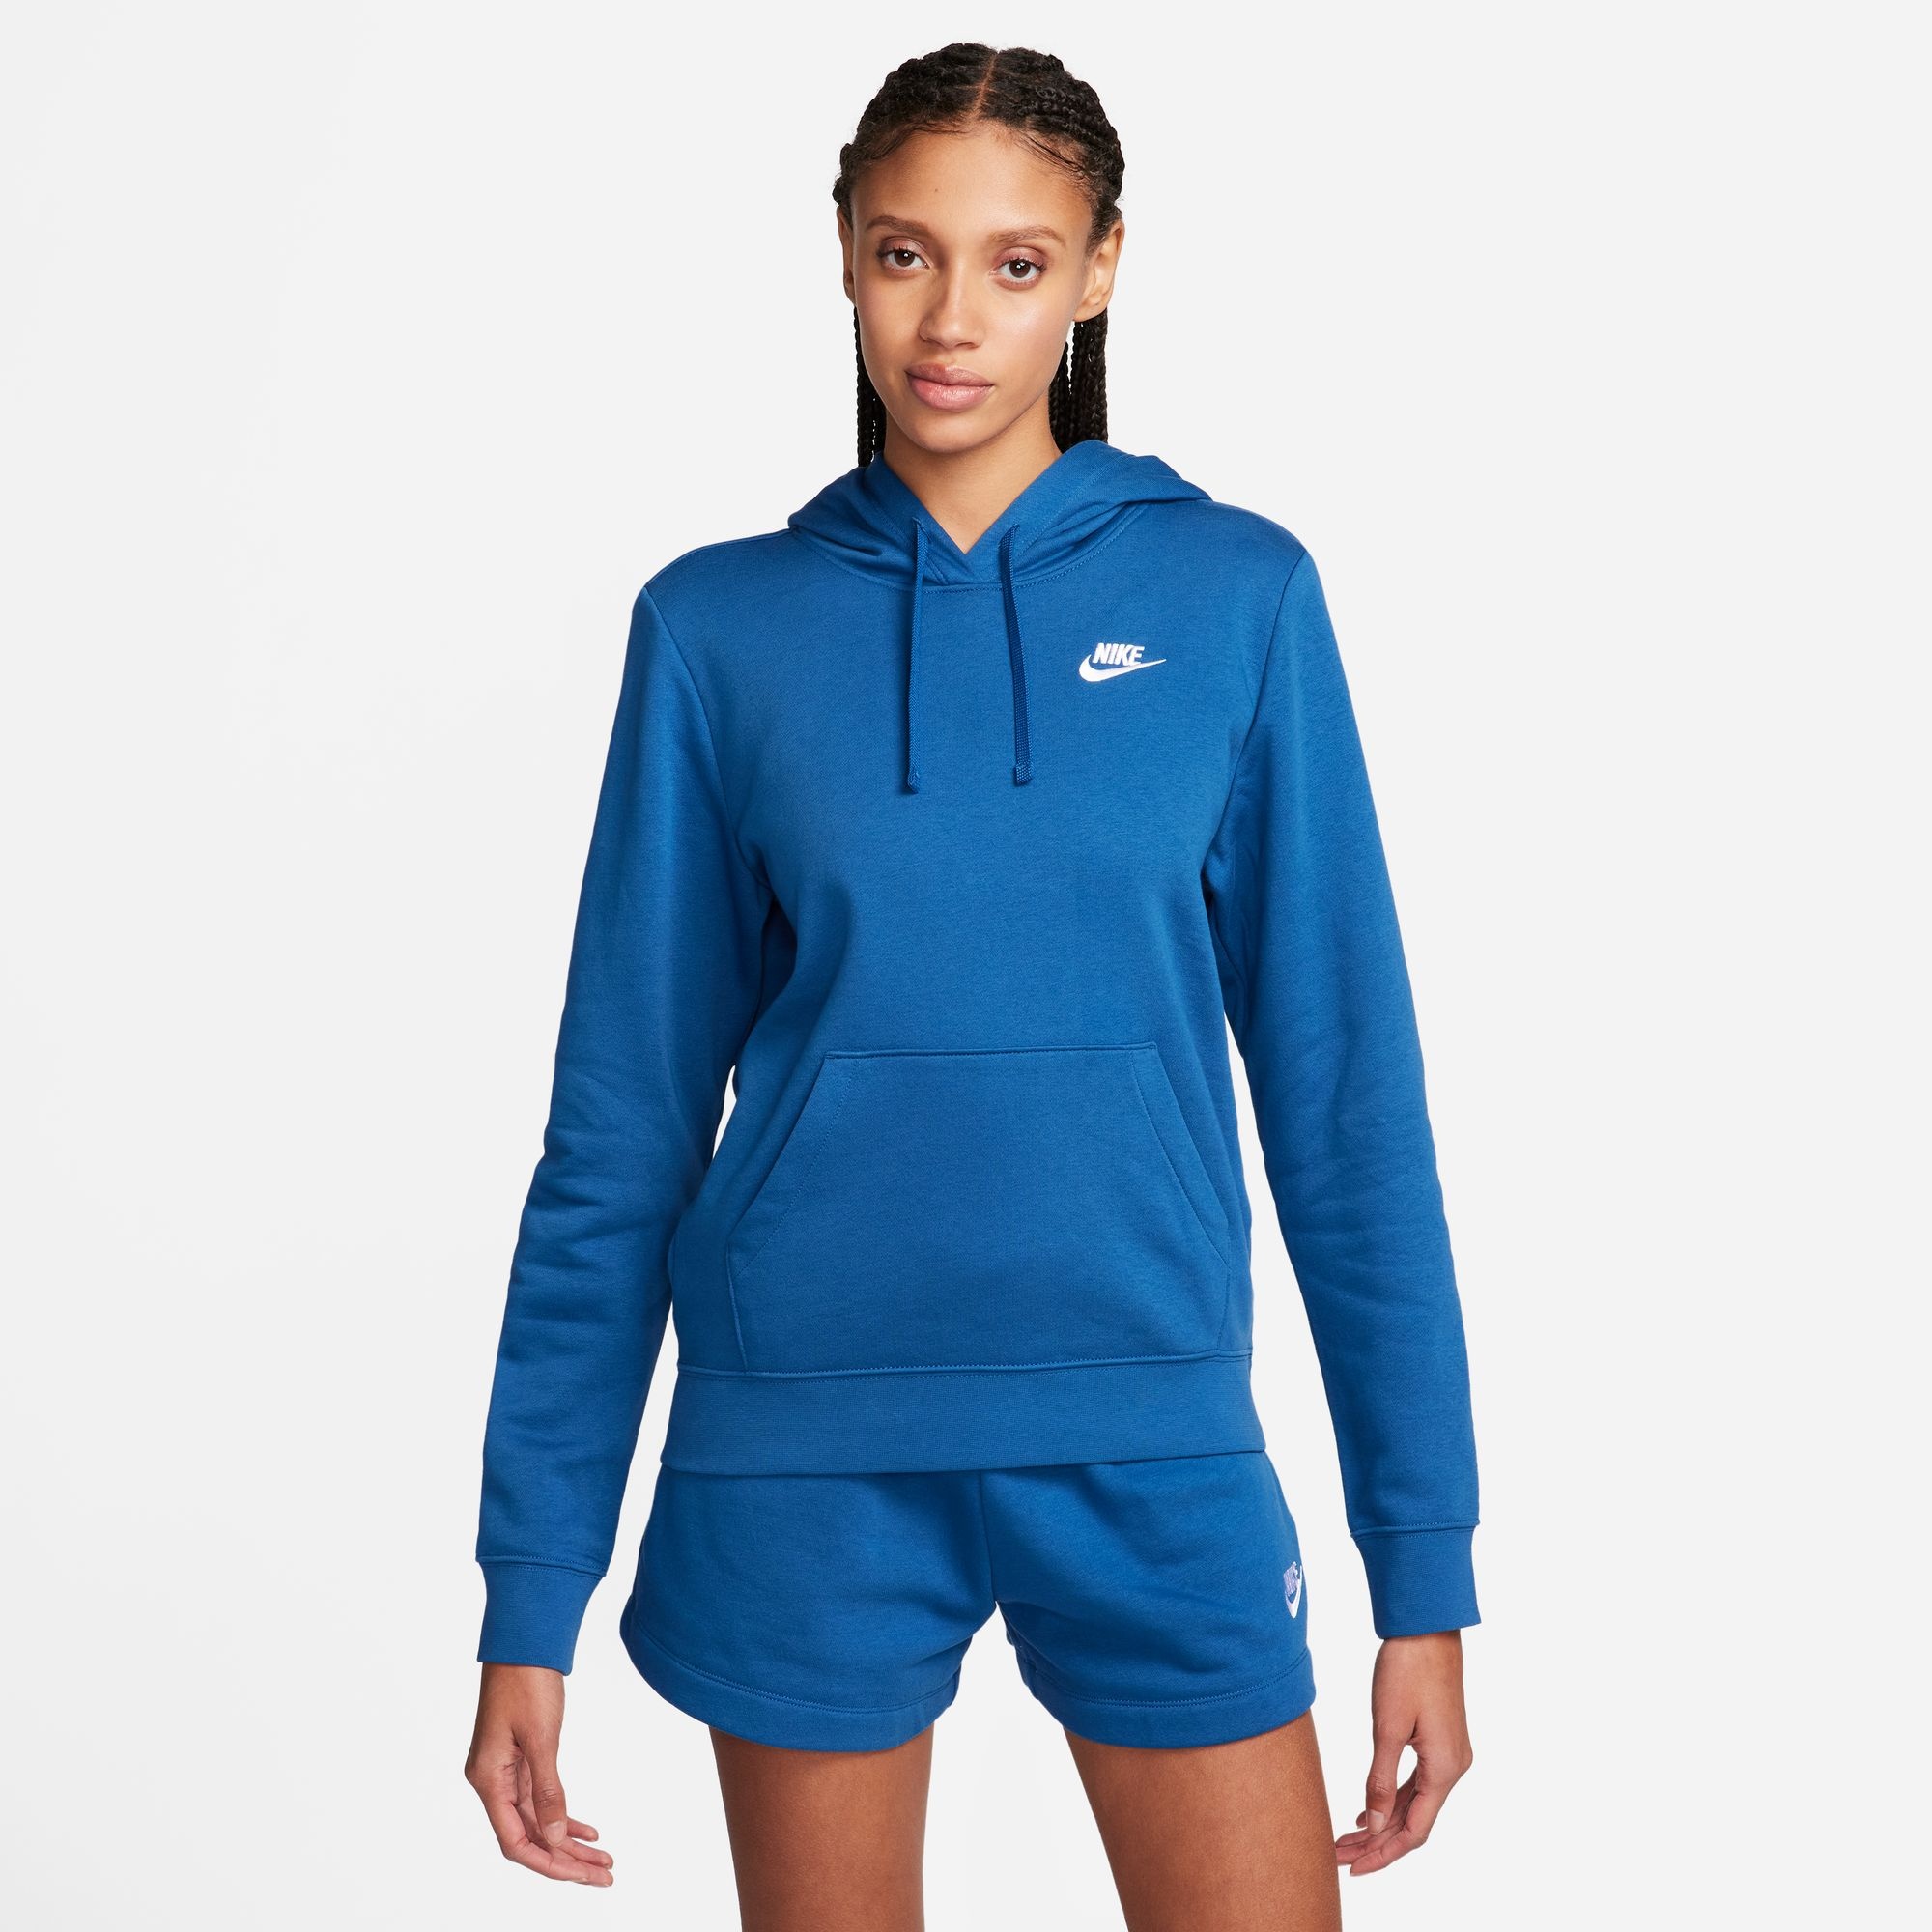 Women's XS Athletic Wear (Nike & More)! for Sale in Pullman, WA